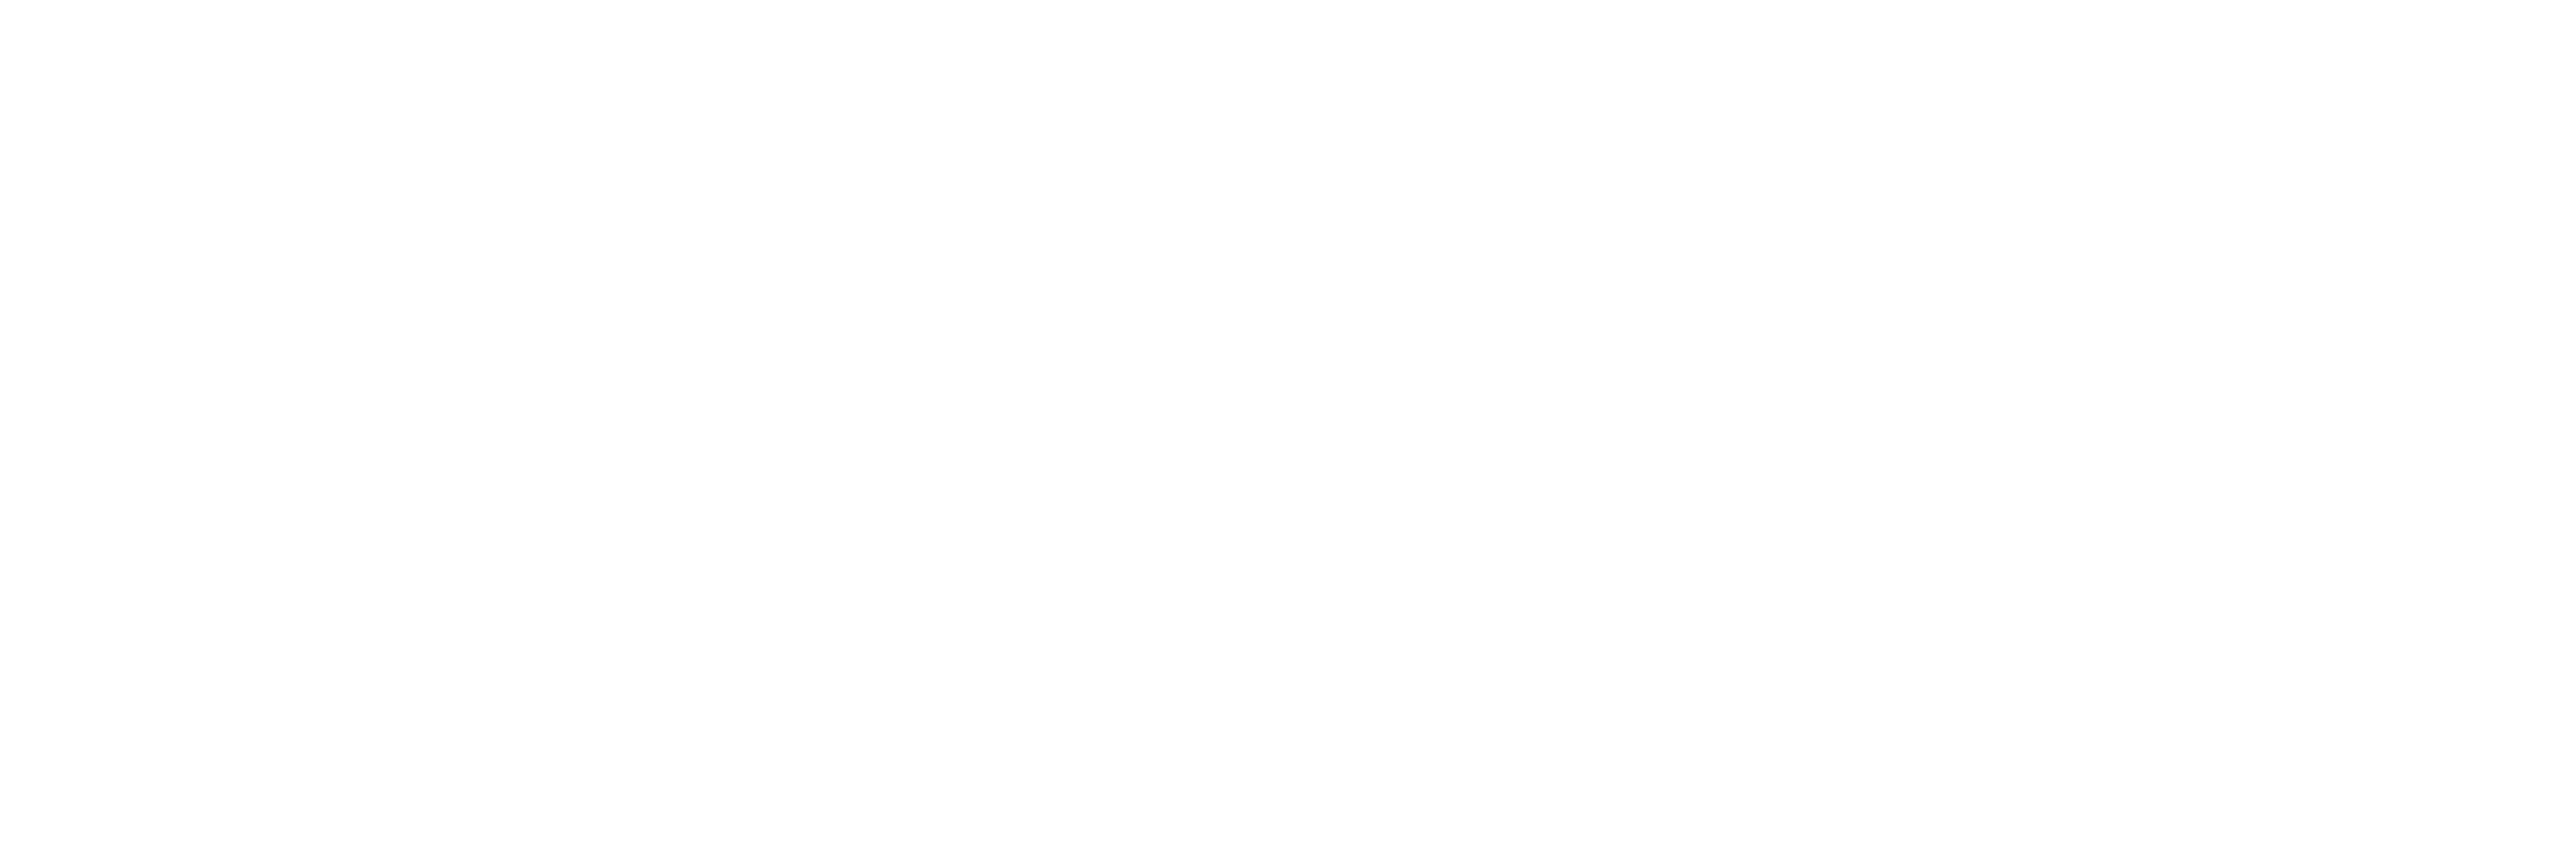 Junior Achievement of the Heartland